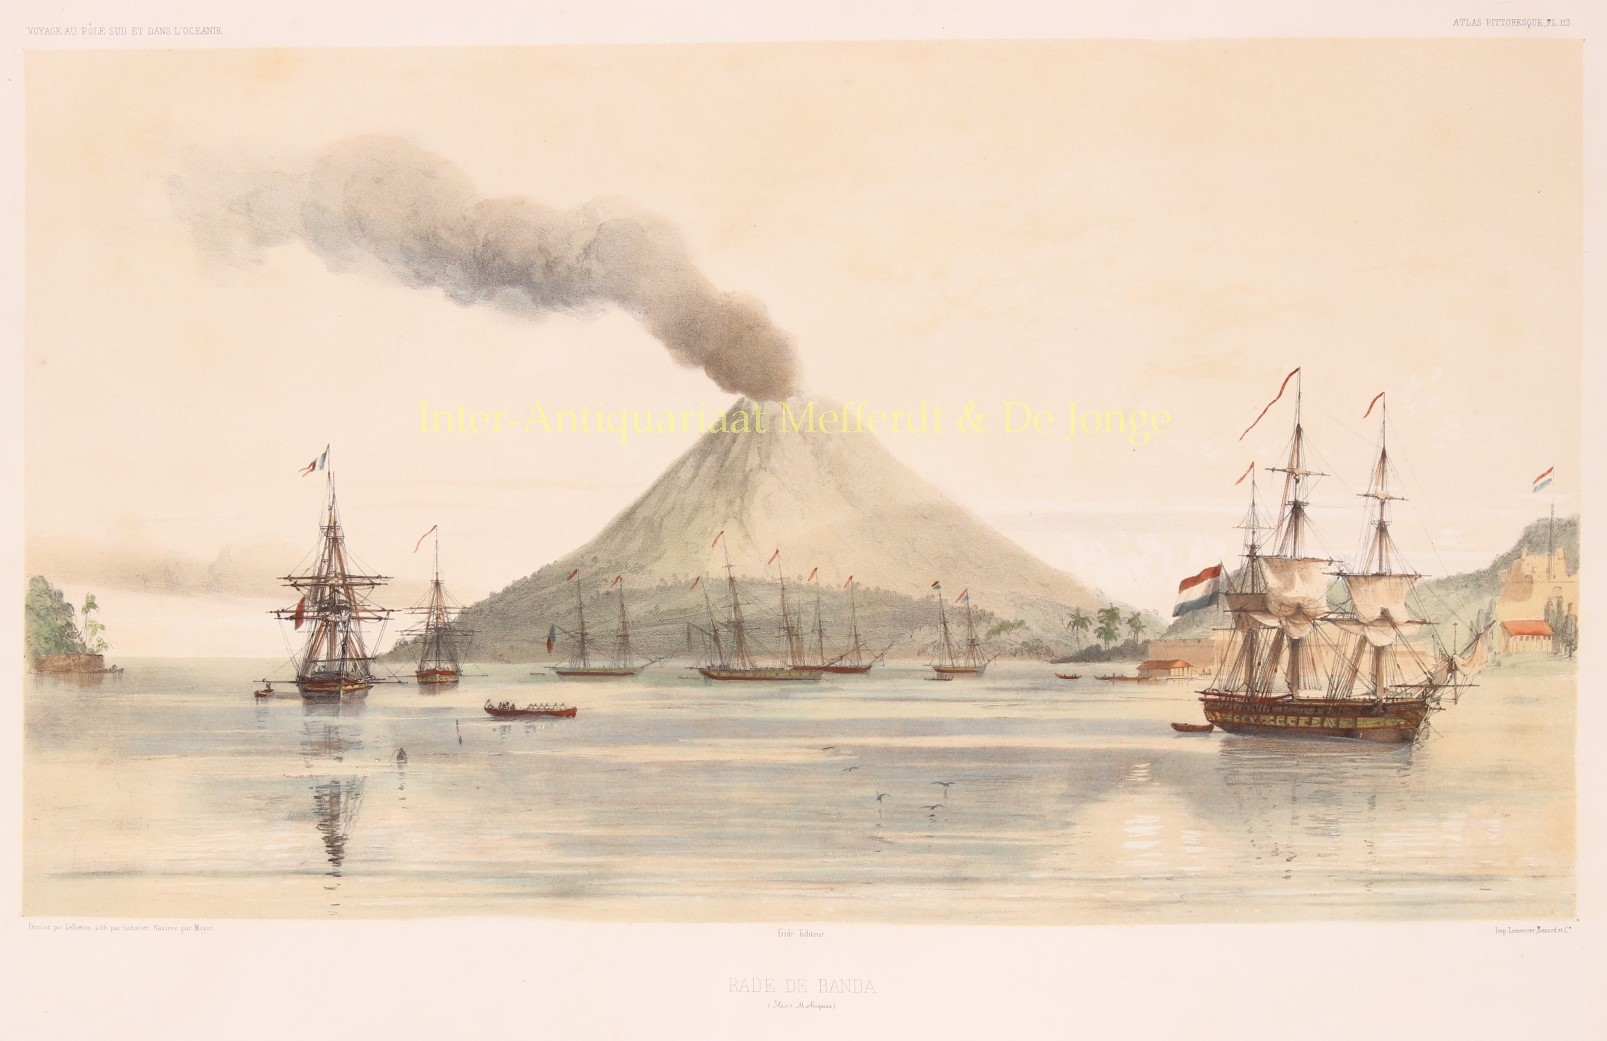 Le Breton-- Louis (1818-1866) - Banda Islands (Moluccas) - Lon Jean-Babtiste Sabatier after Louis Le Breton, 1846